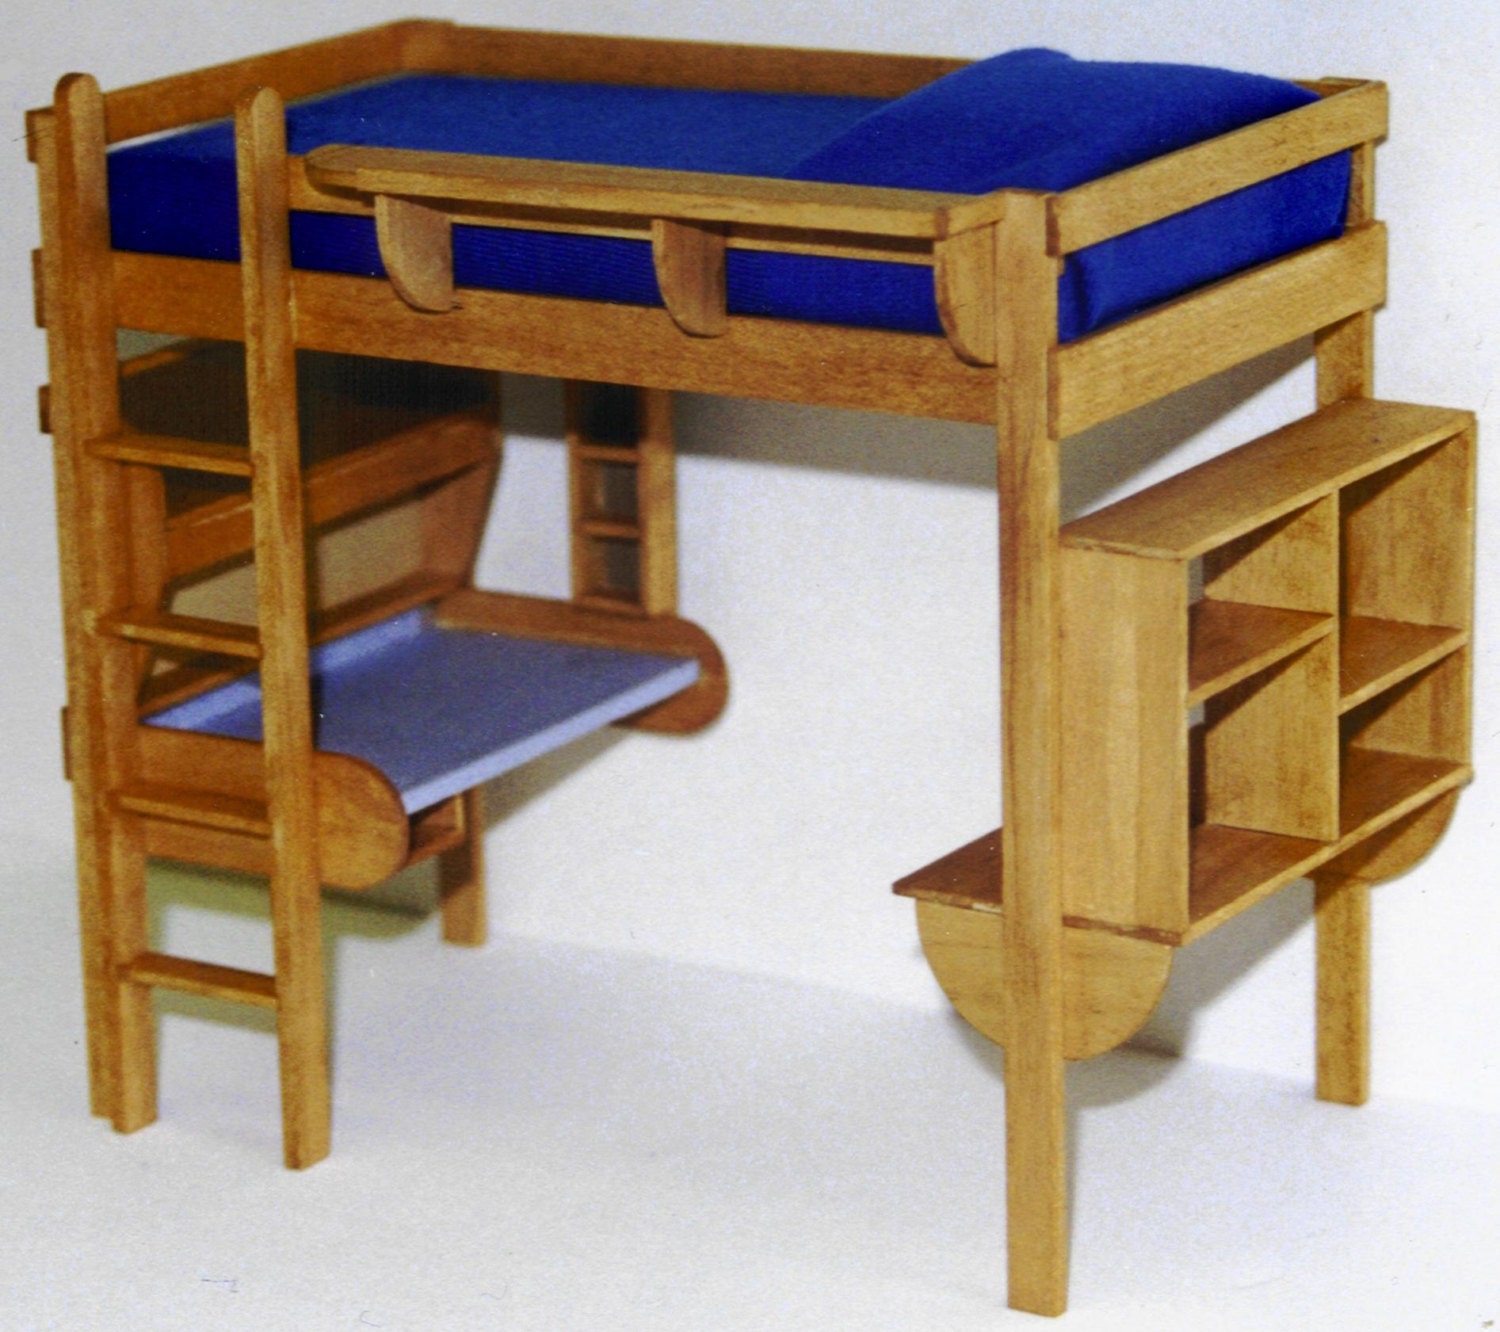 CHILDREN S LOFT BED with desk and storage woodworking